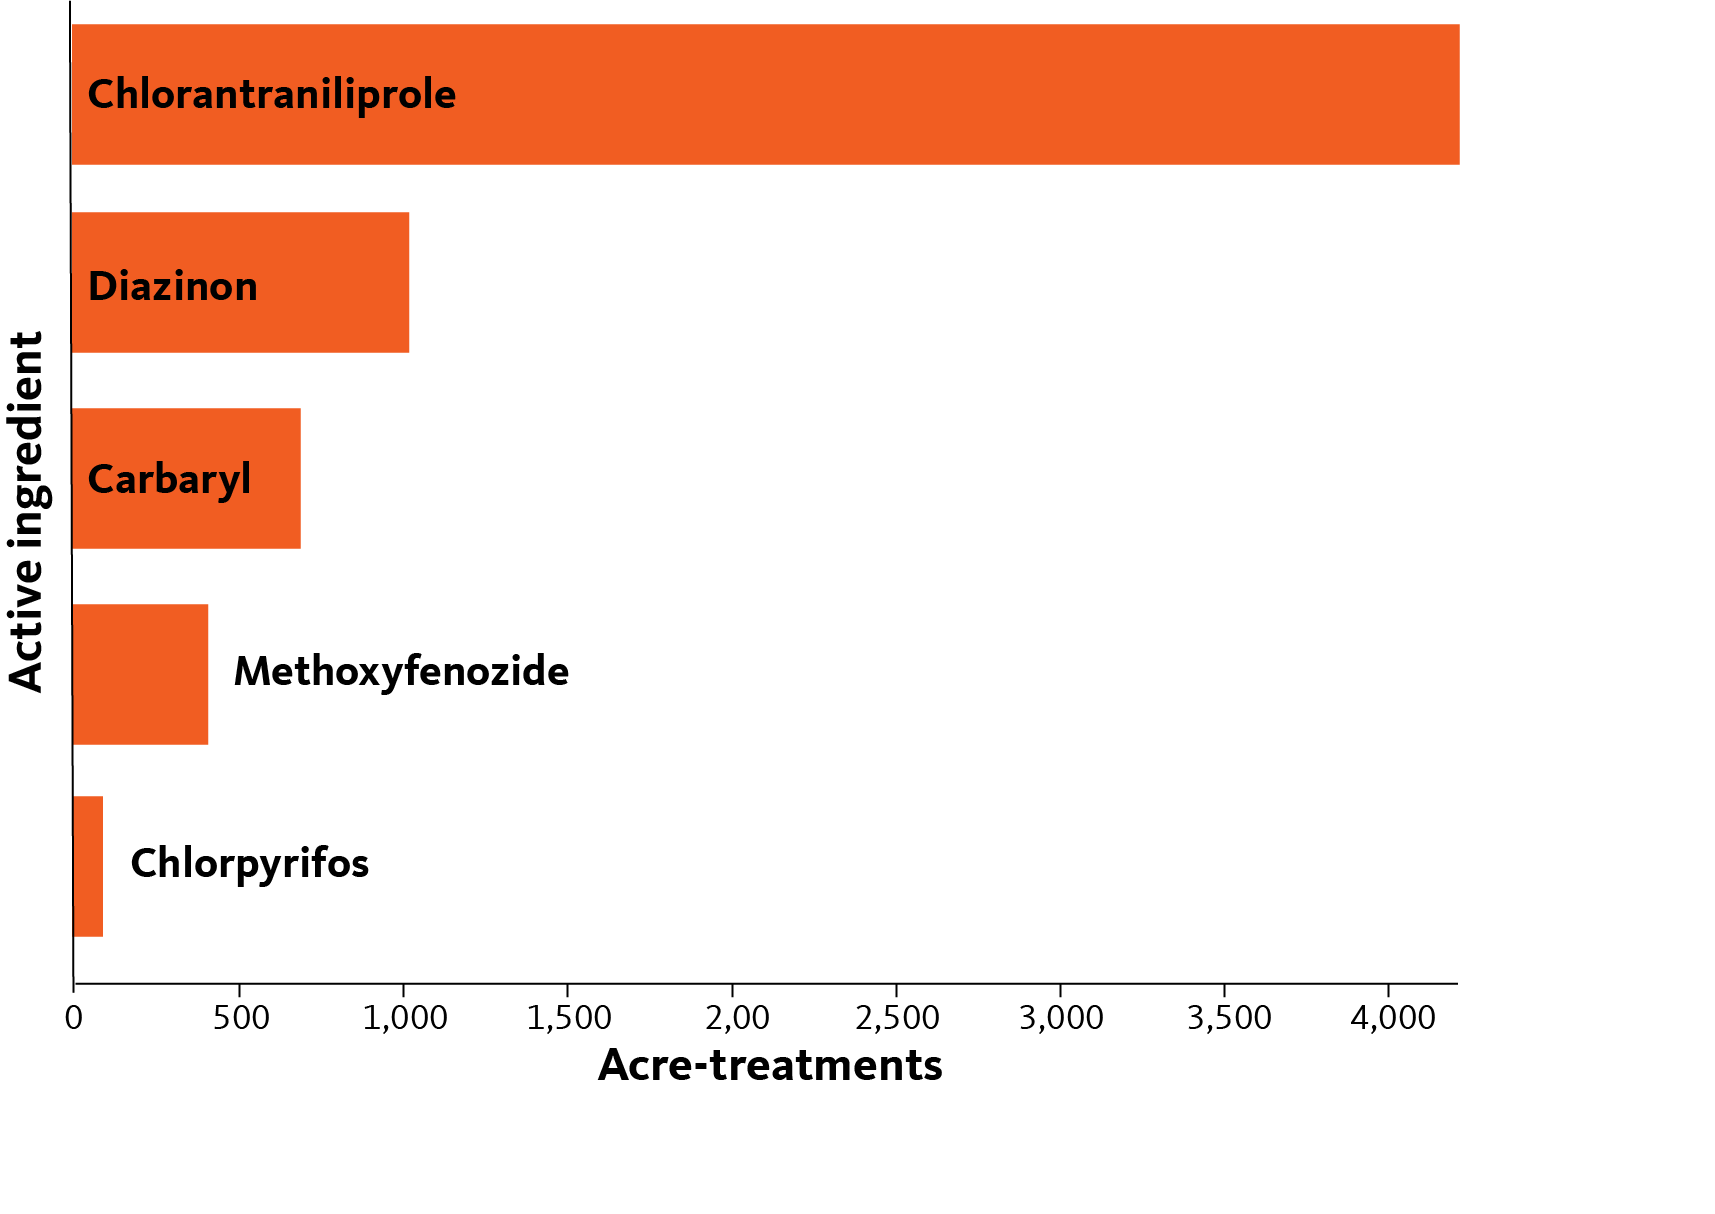 Bar chart showing acre-treatments for pesticides